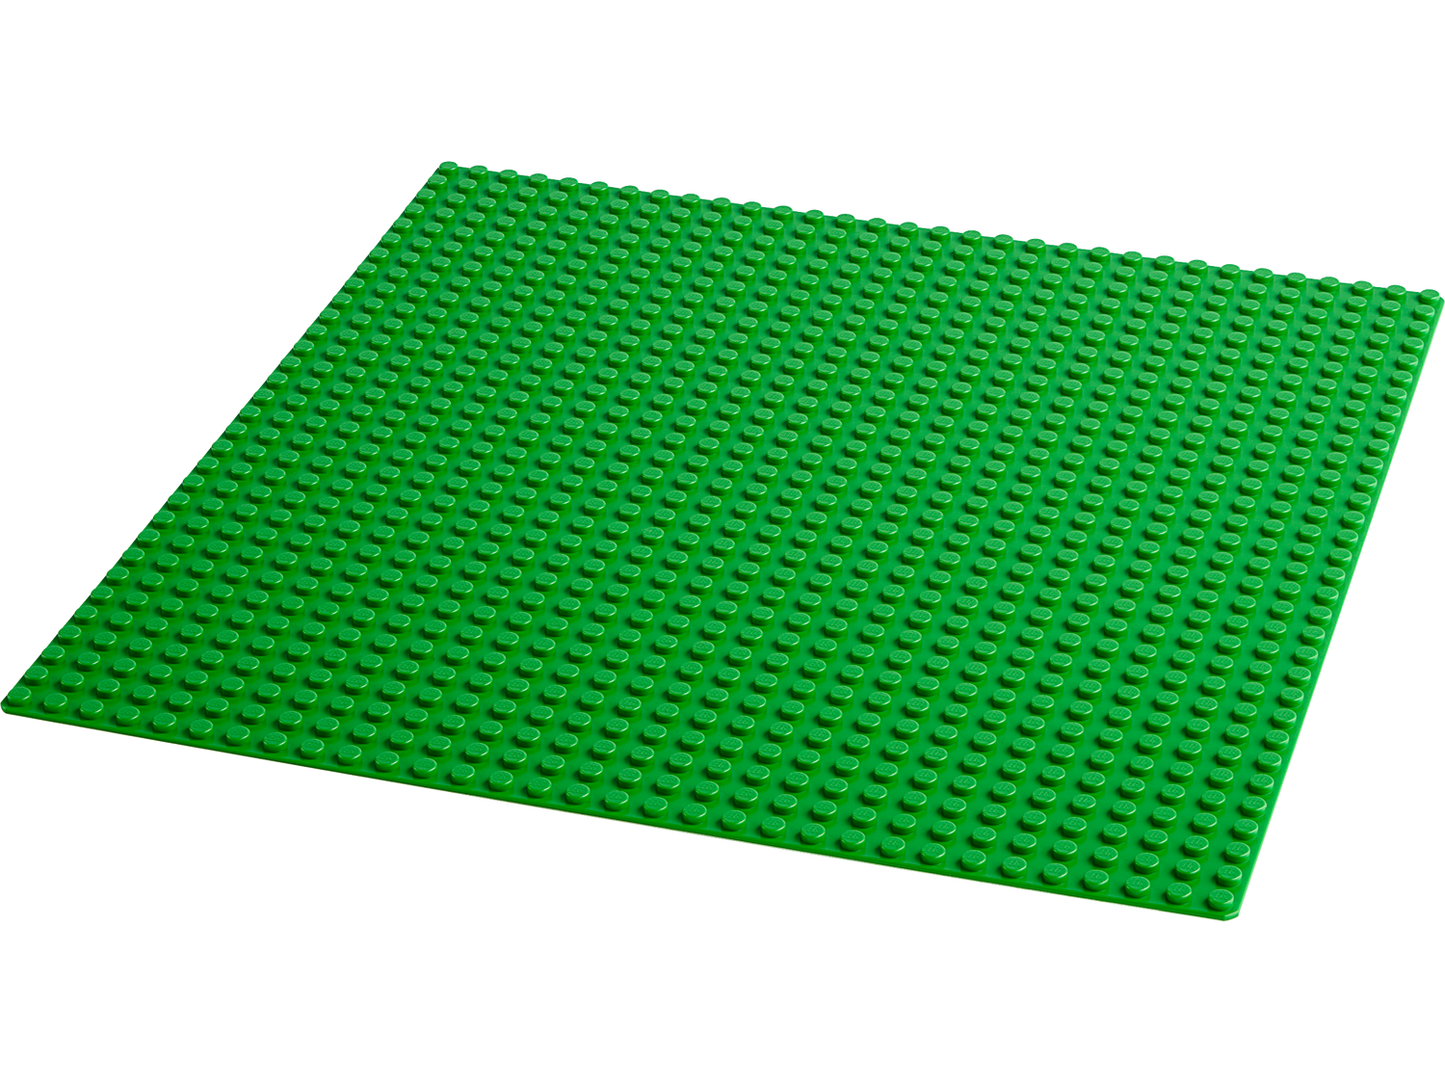 11023 LEGO Classic - Base Verde